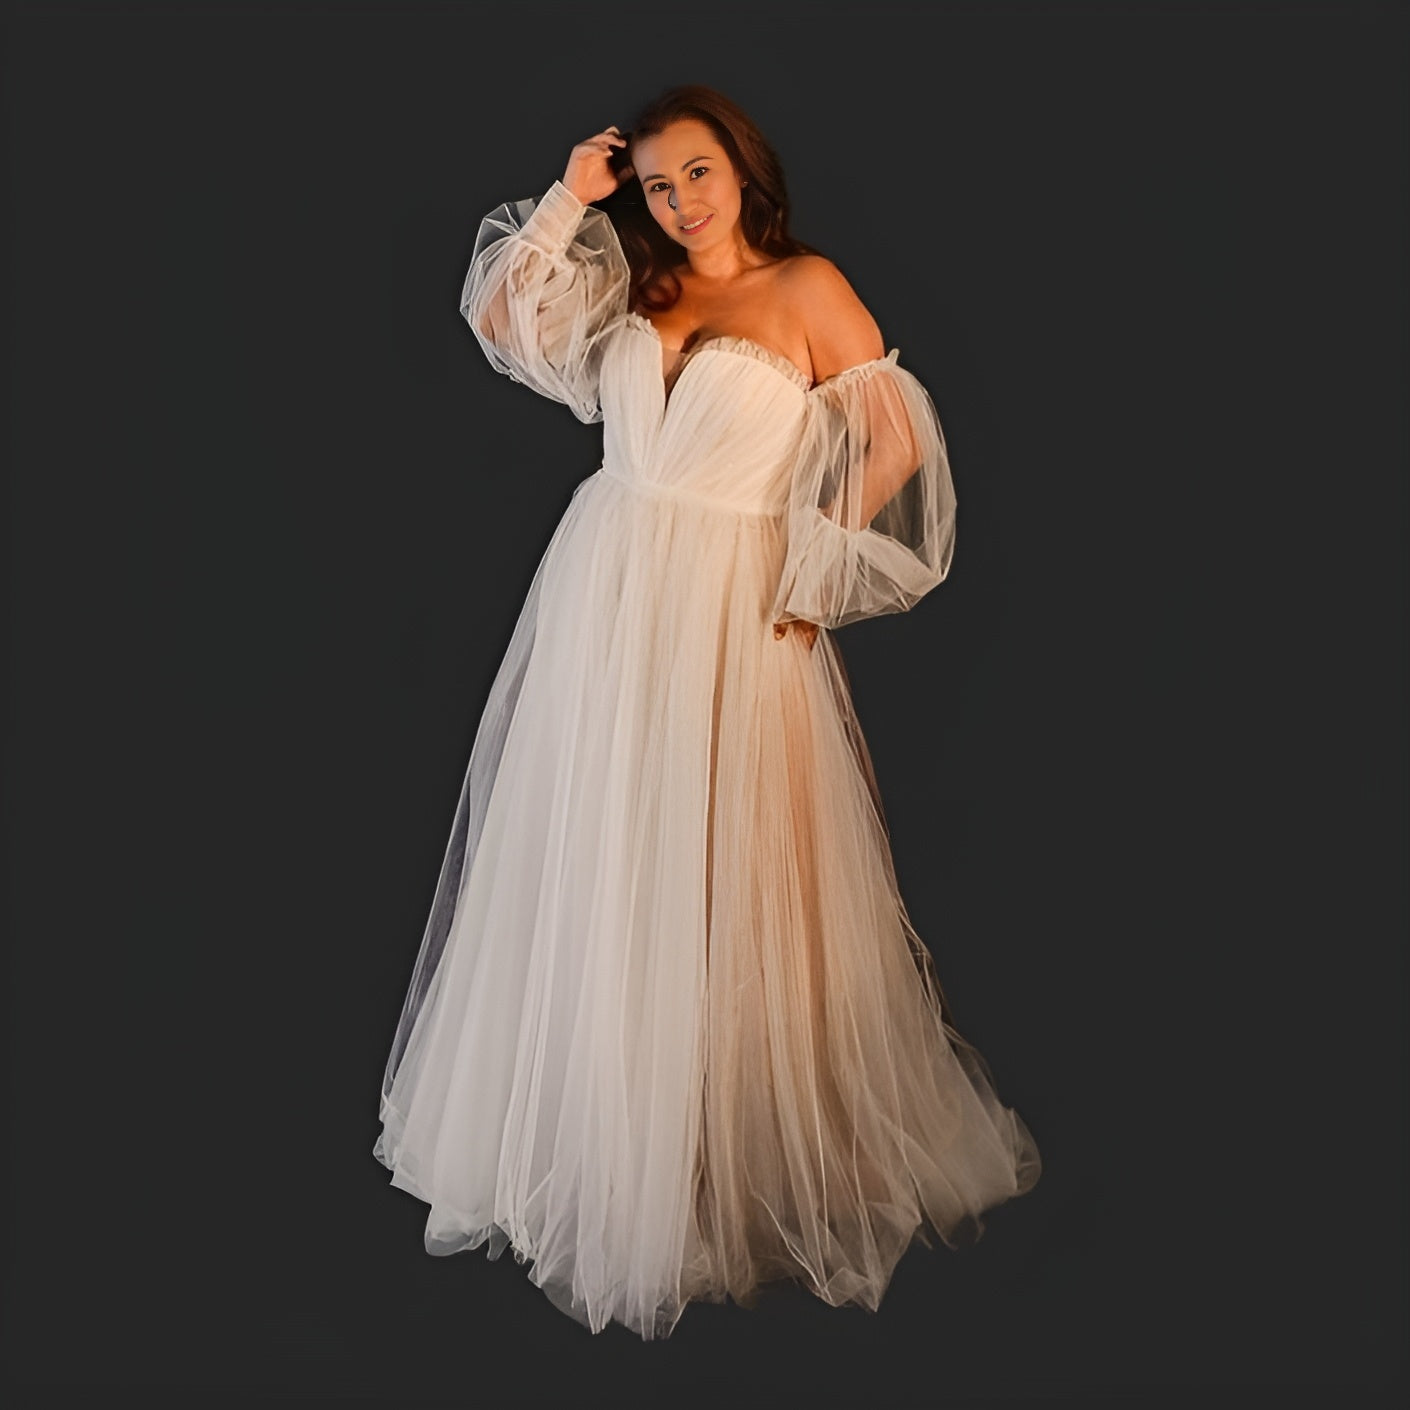 Plus Size Black Wedding Dress Ideas For Curvy Brides + FAQs  Black wedding  dresses, Black wedding gowns, Black white wedding dress